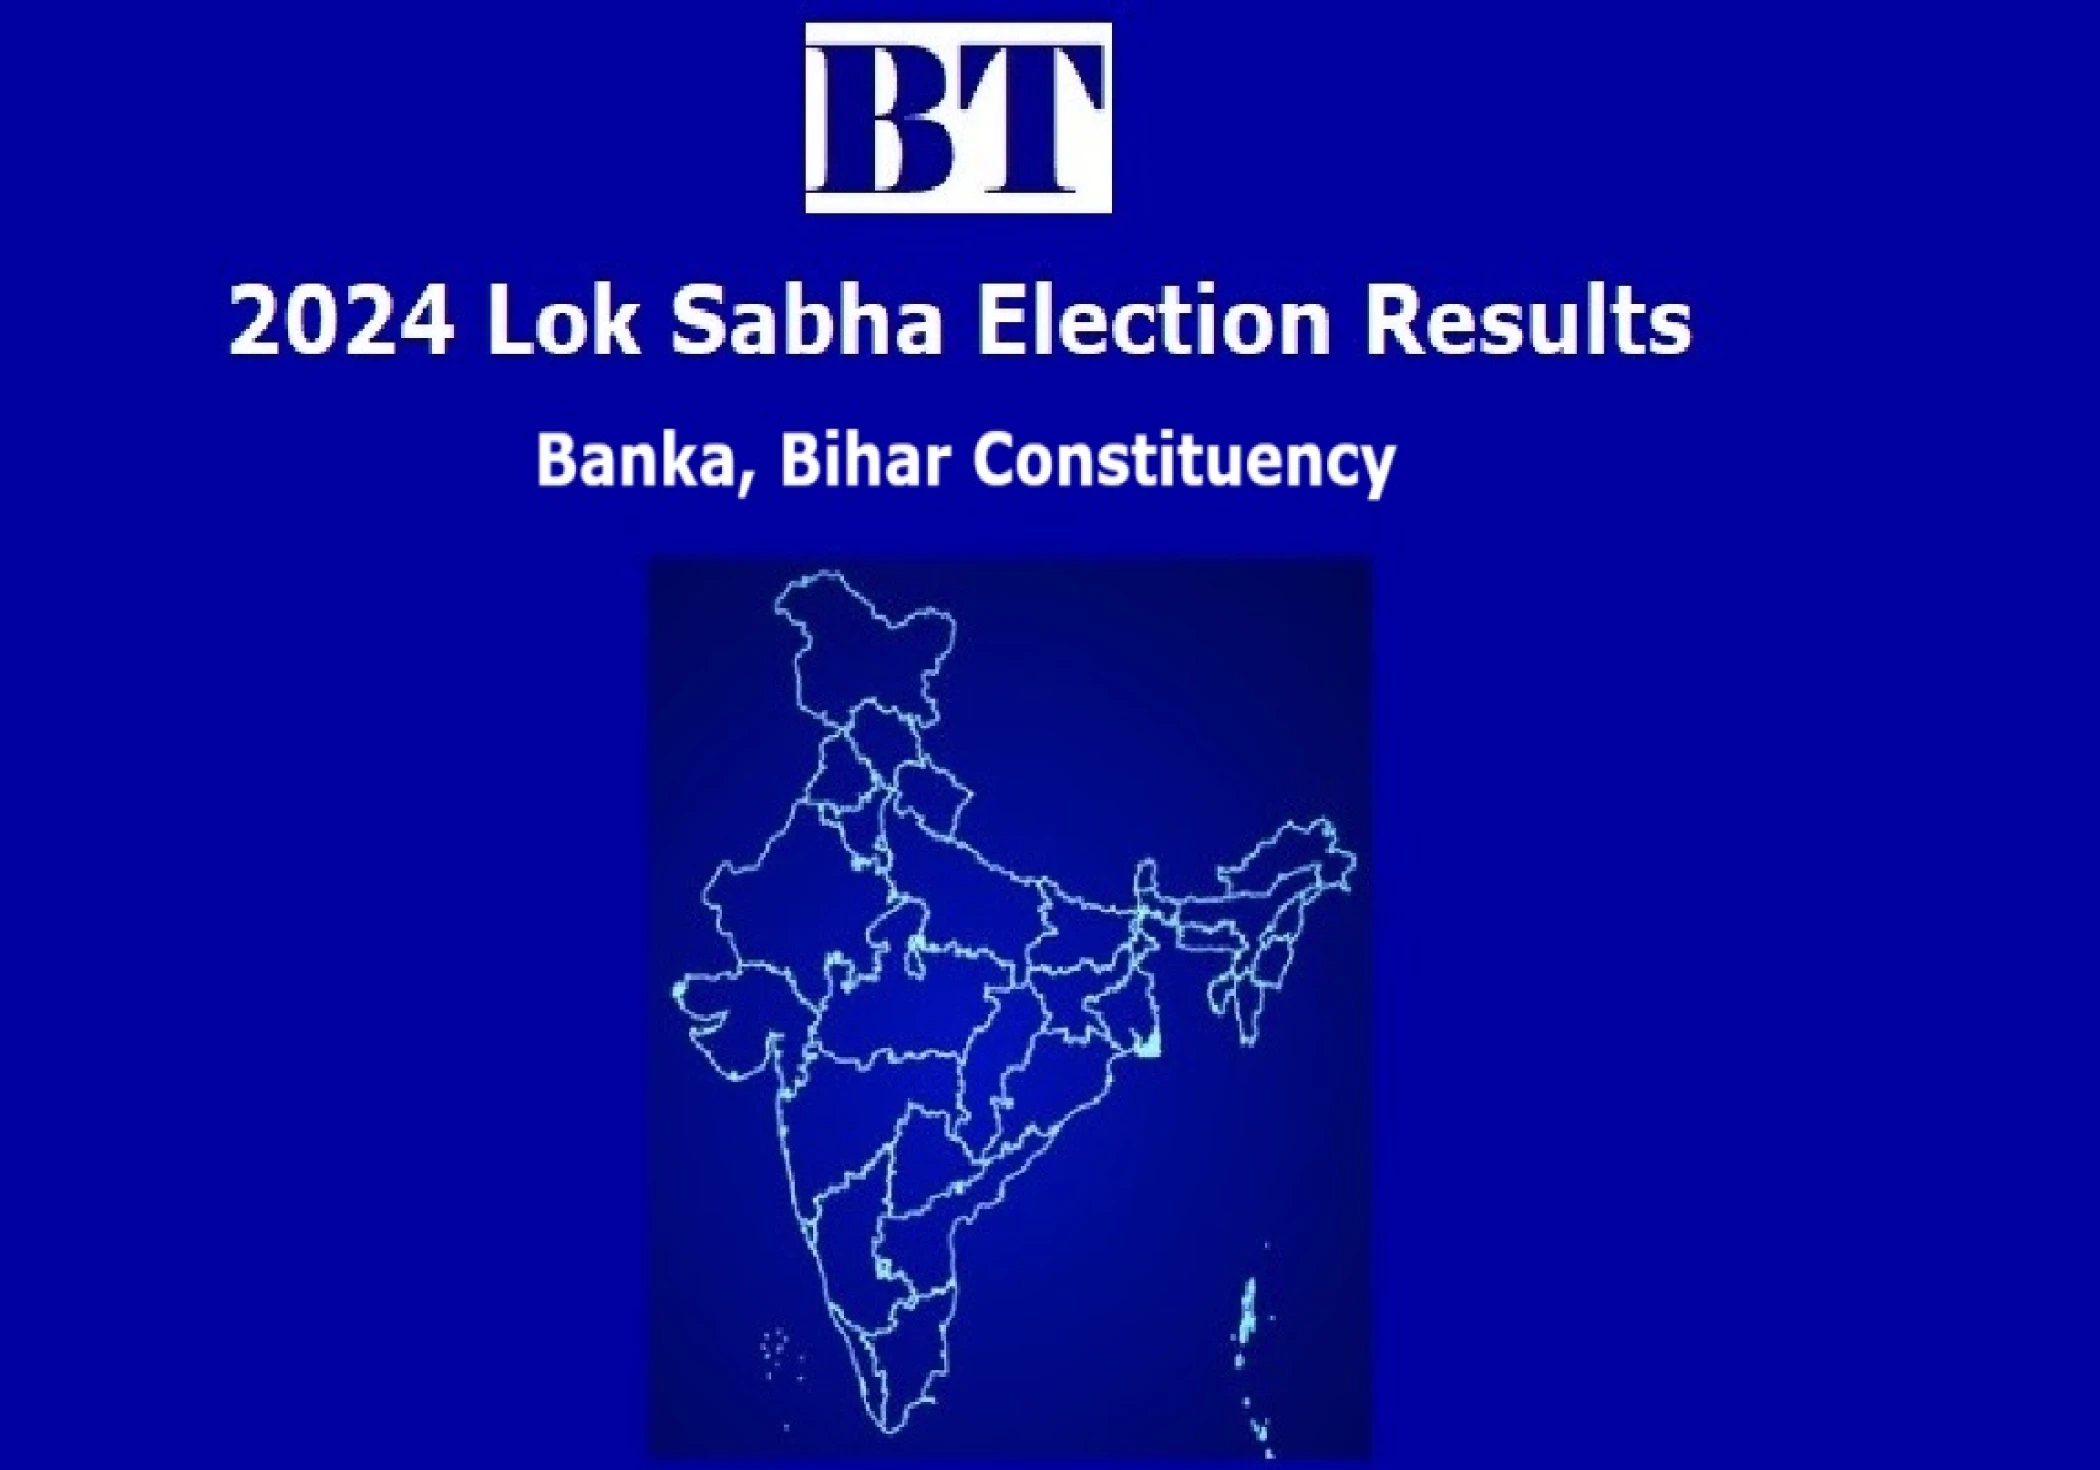 Banka Constituency Lok Sabha Election Results 2024